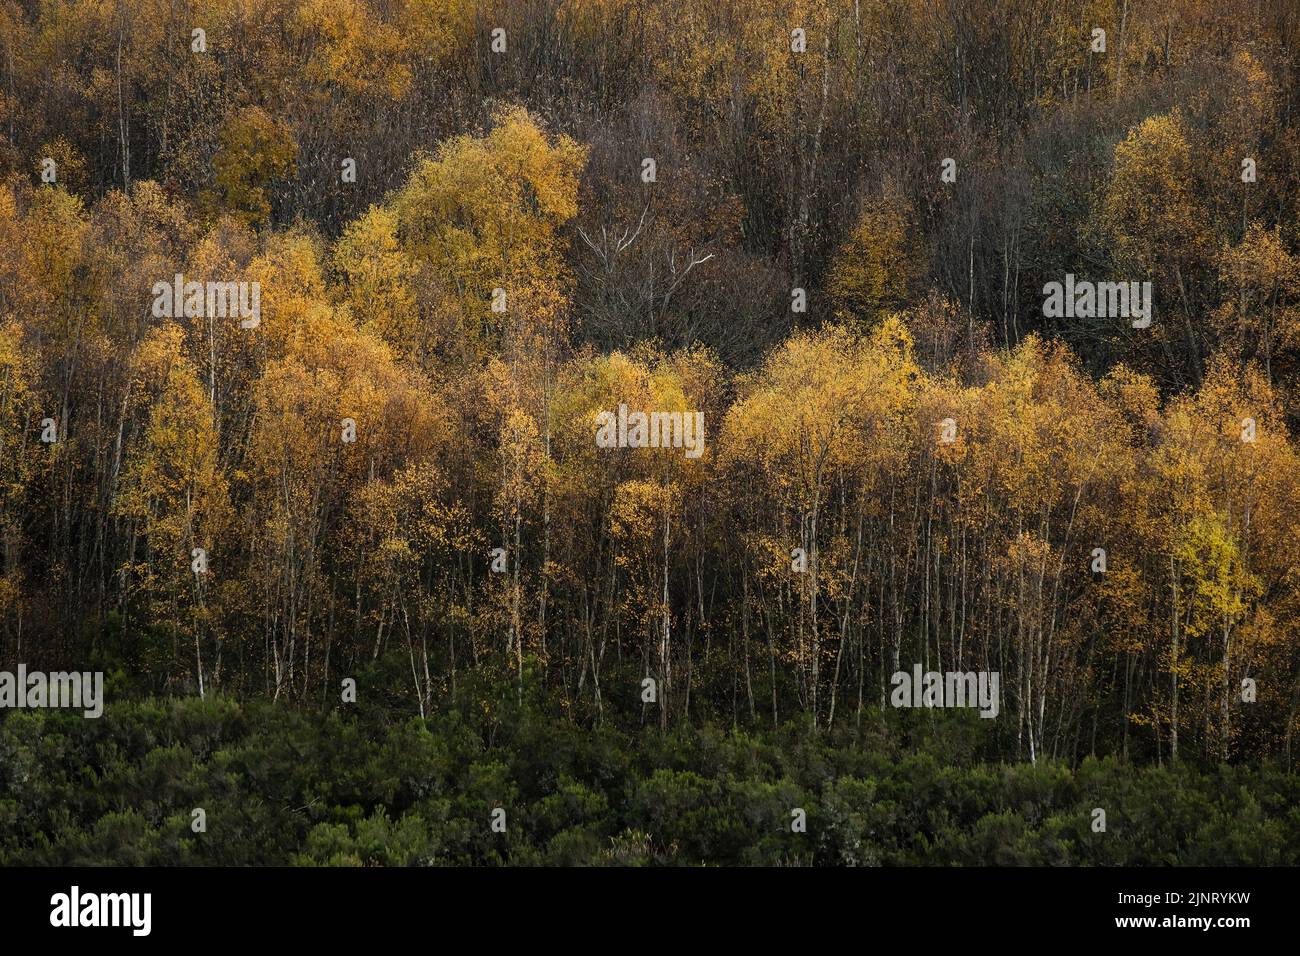 European white birch (Betula pubescens) trees with autumnal golden foliage Stock Photo